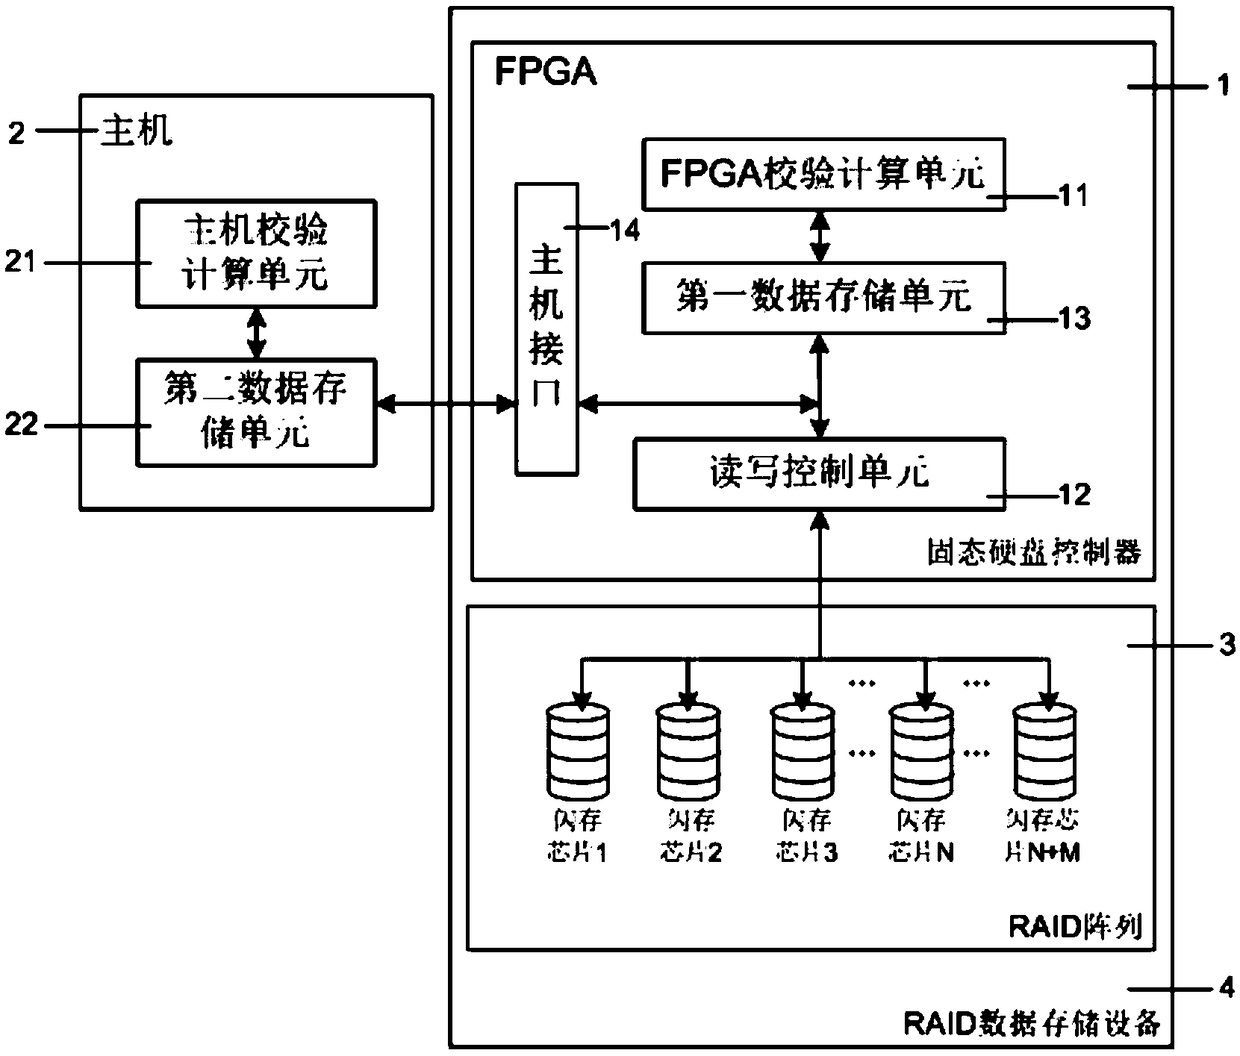 An RAID data storage system and method